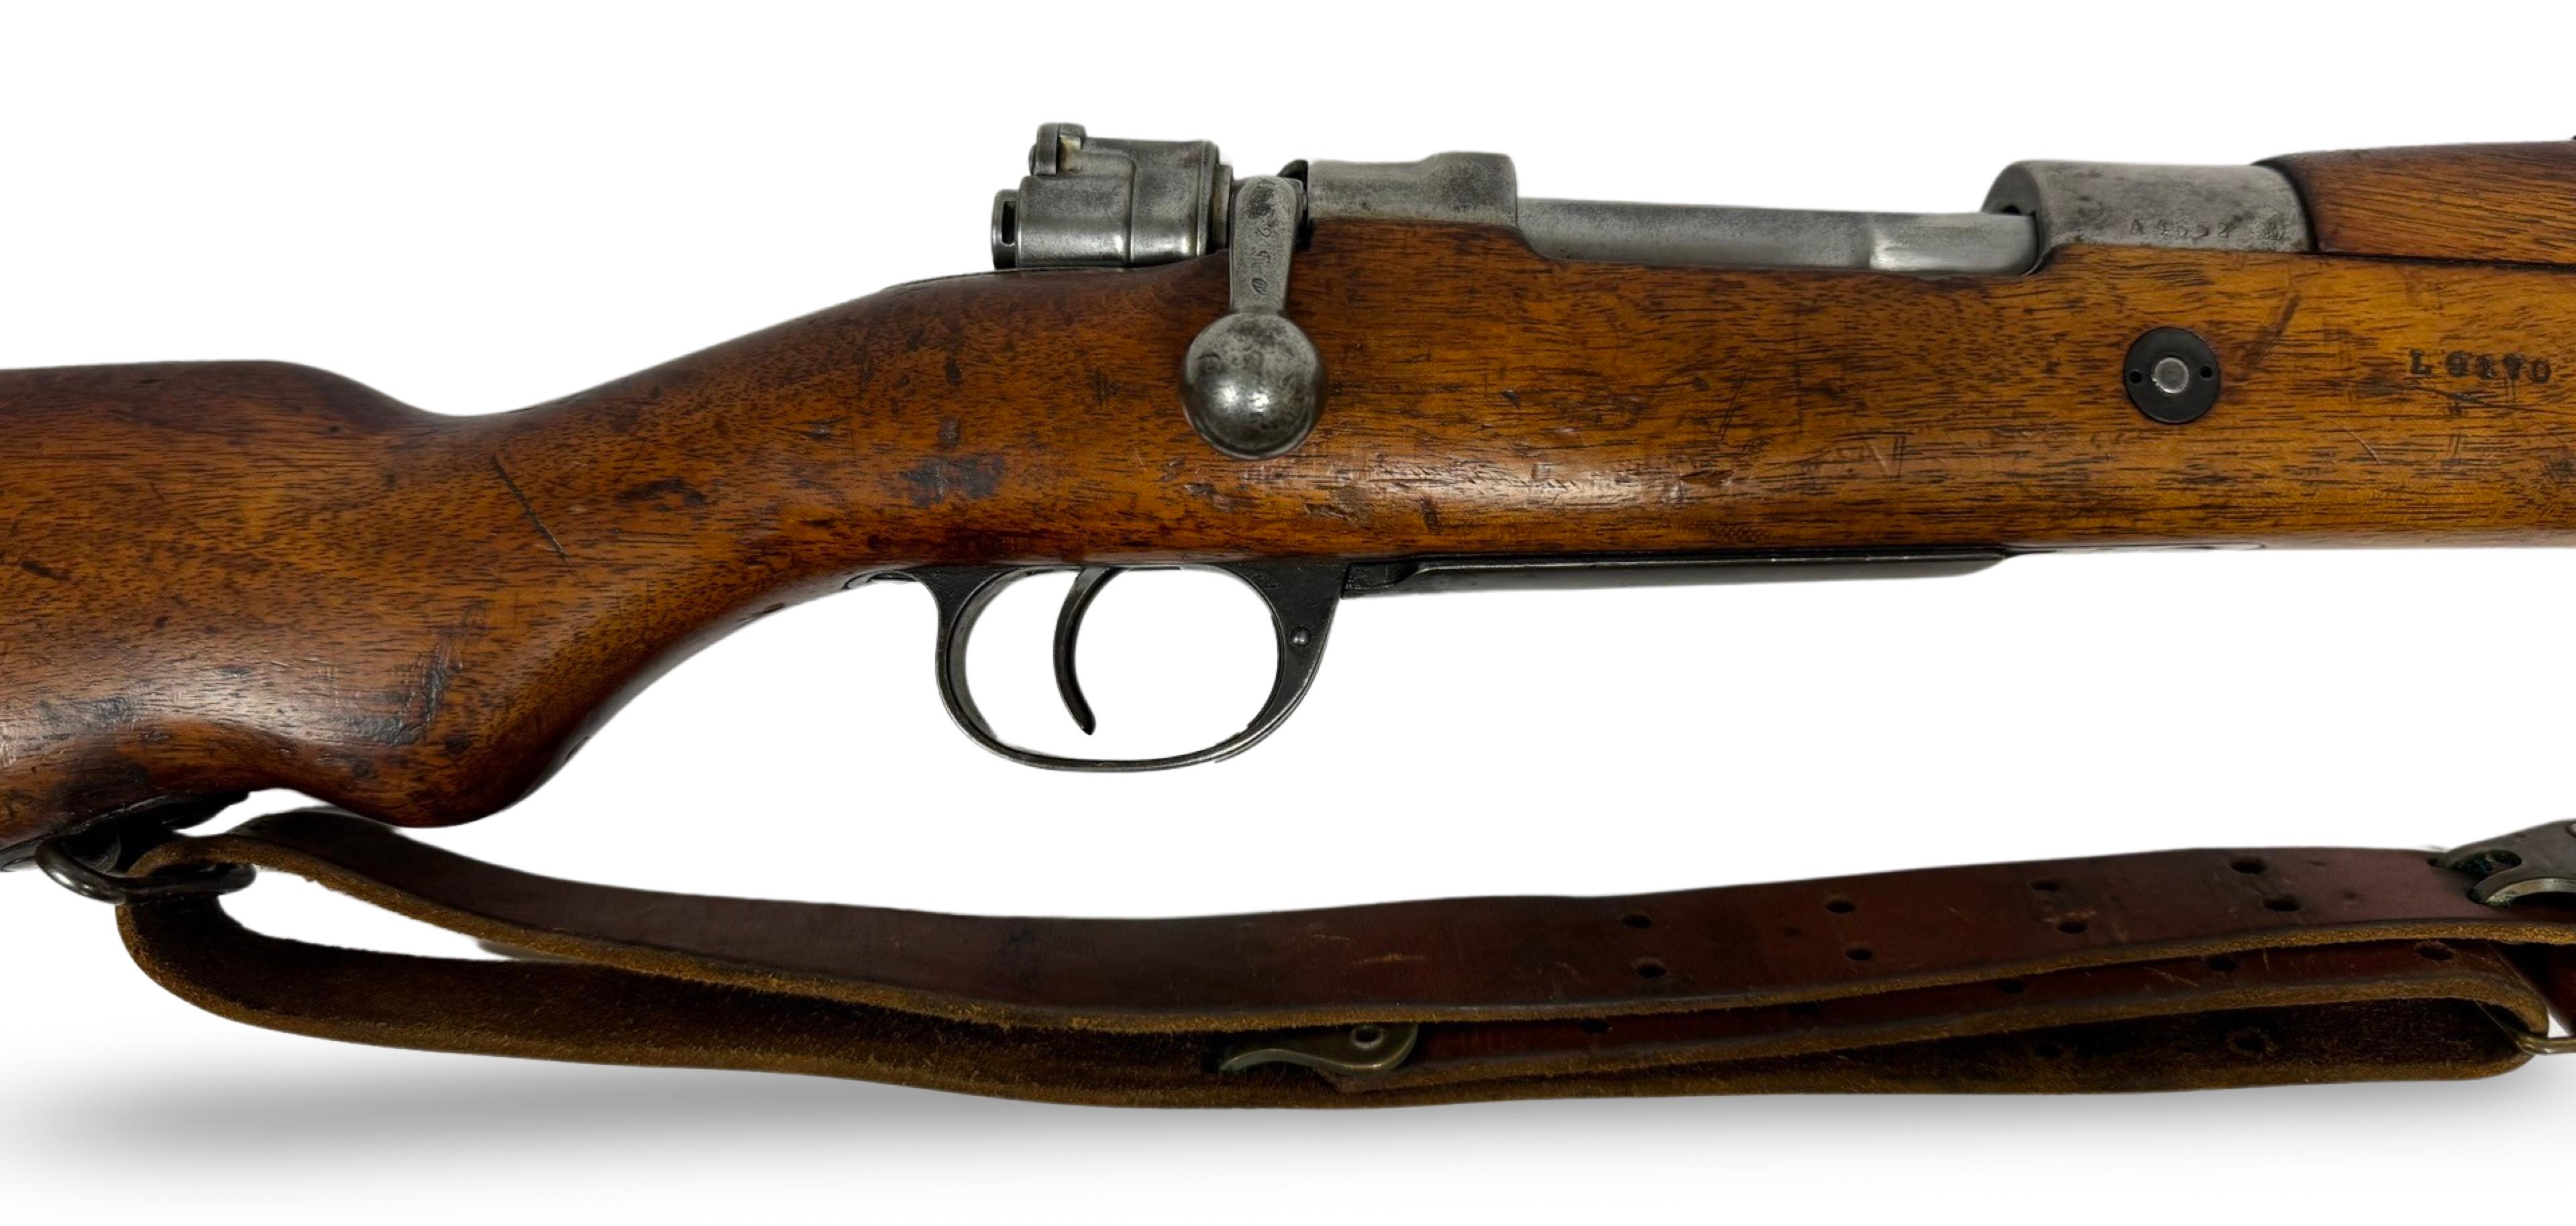 DWM Argentino Mauser Model 1909 7.65mm Bolt Action Rifle